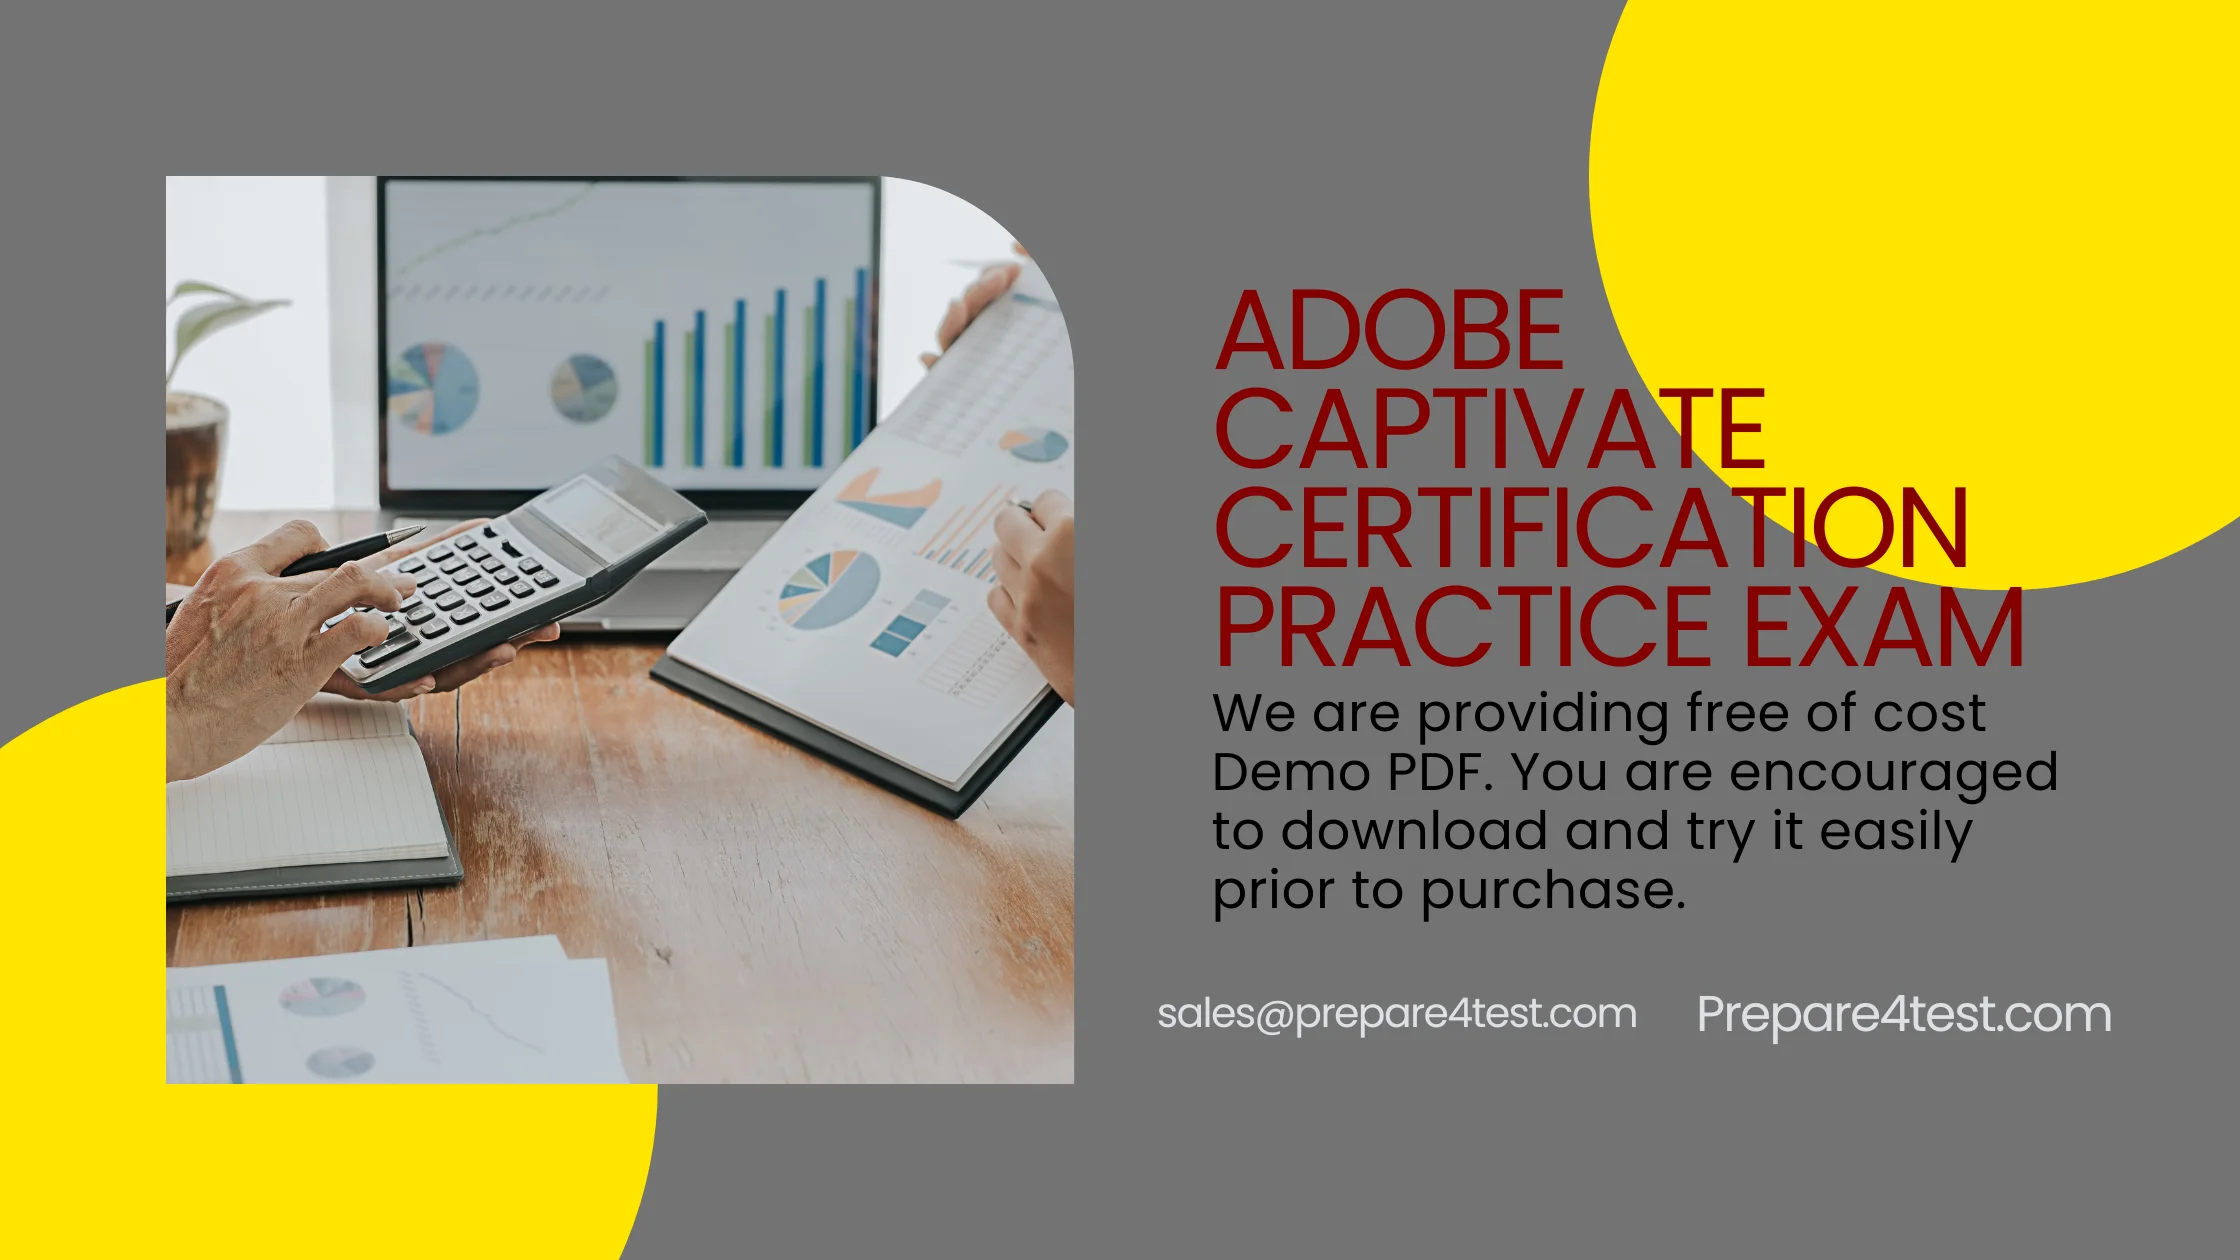 Adobe Captivate Certification Practice Exam promo